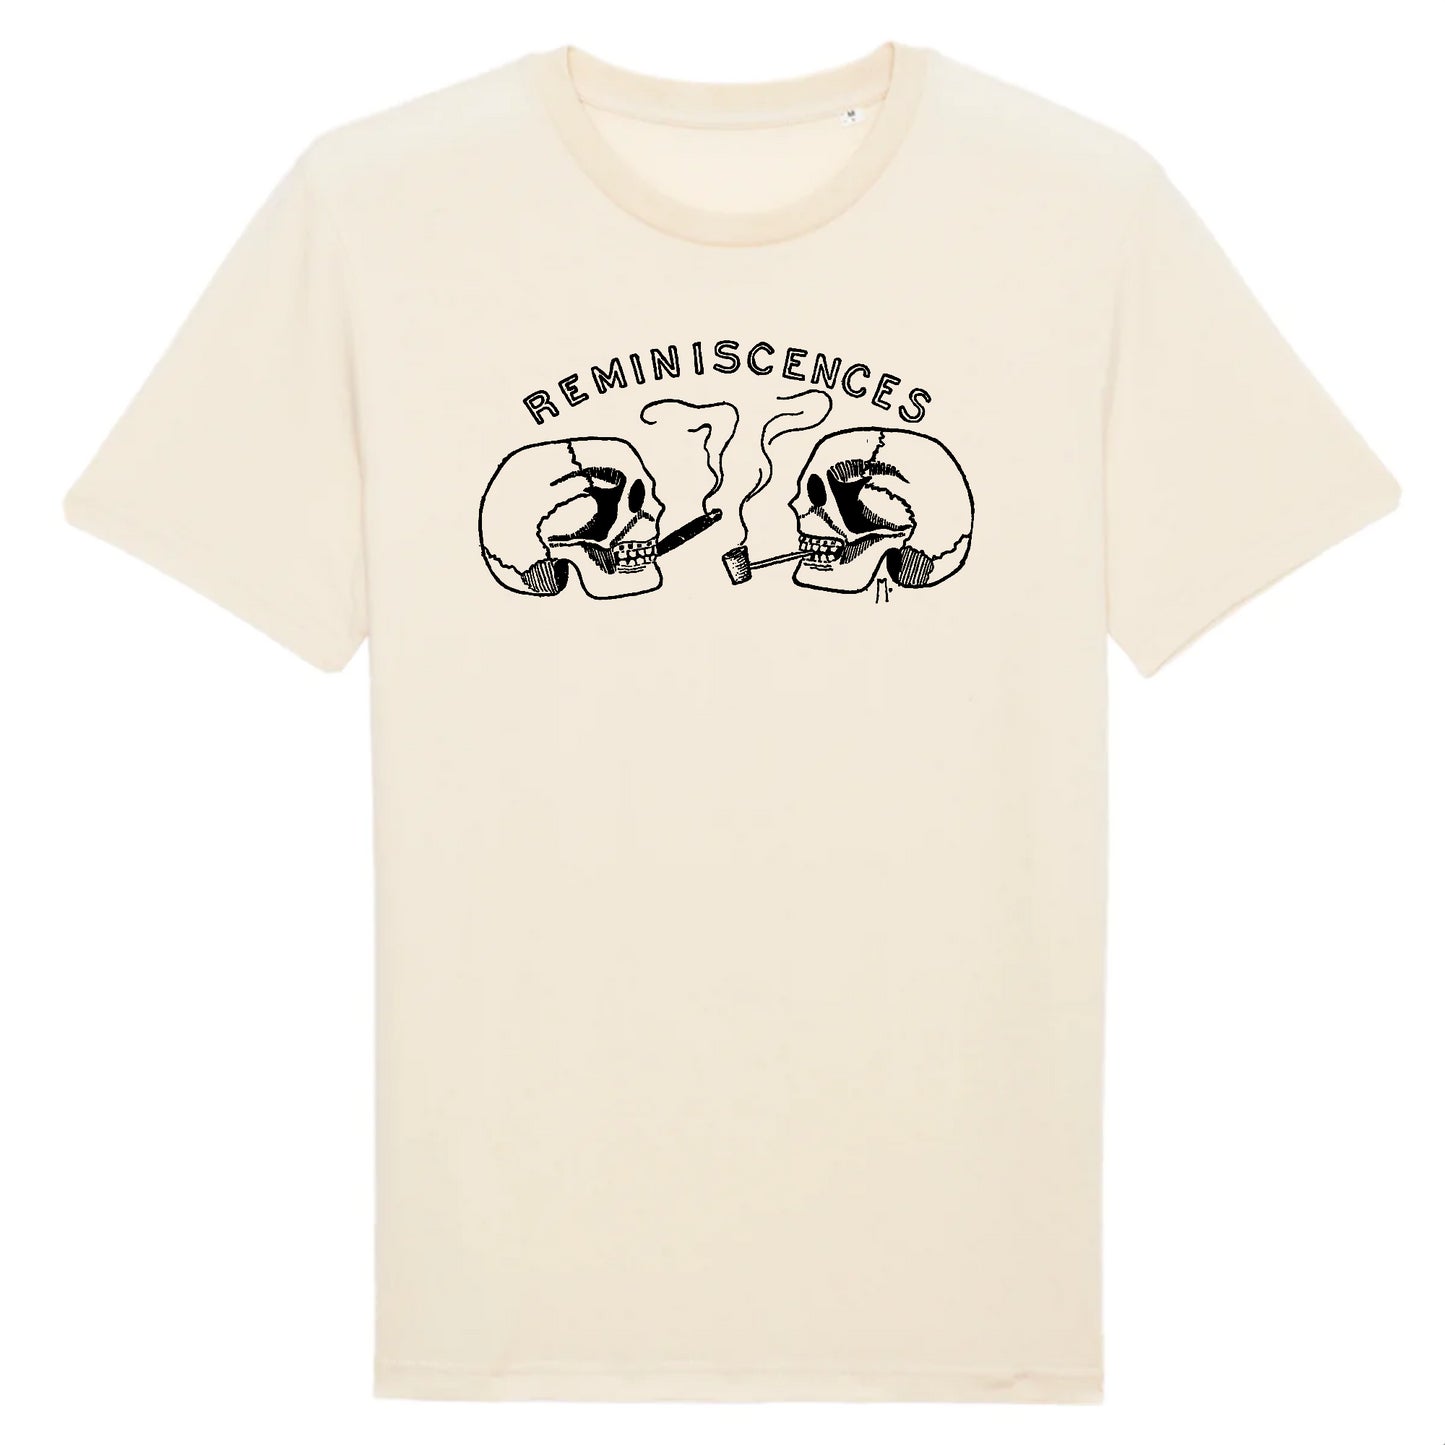 Reminiscences, 1898 - Organic Cotton T-Shirt